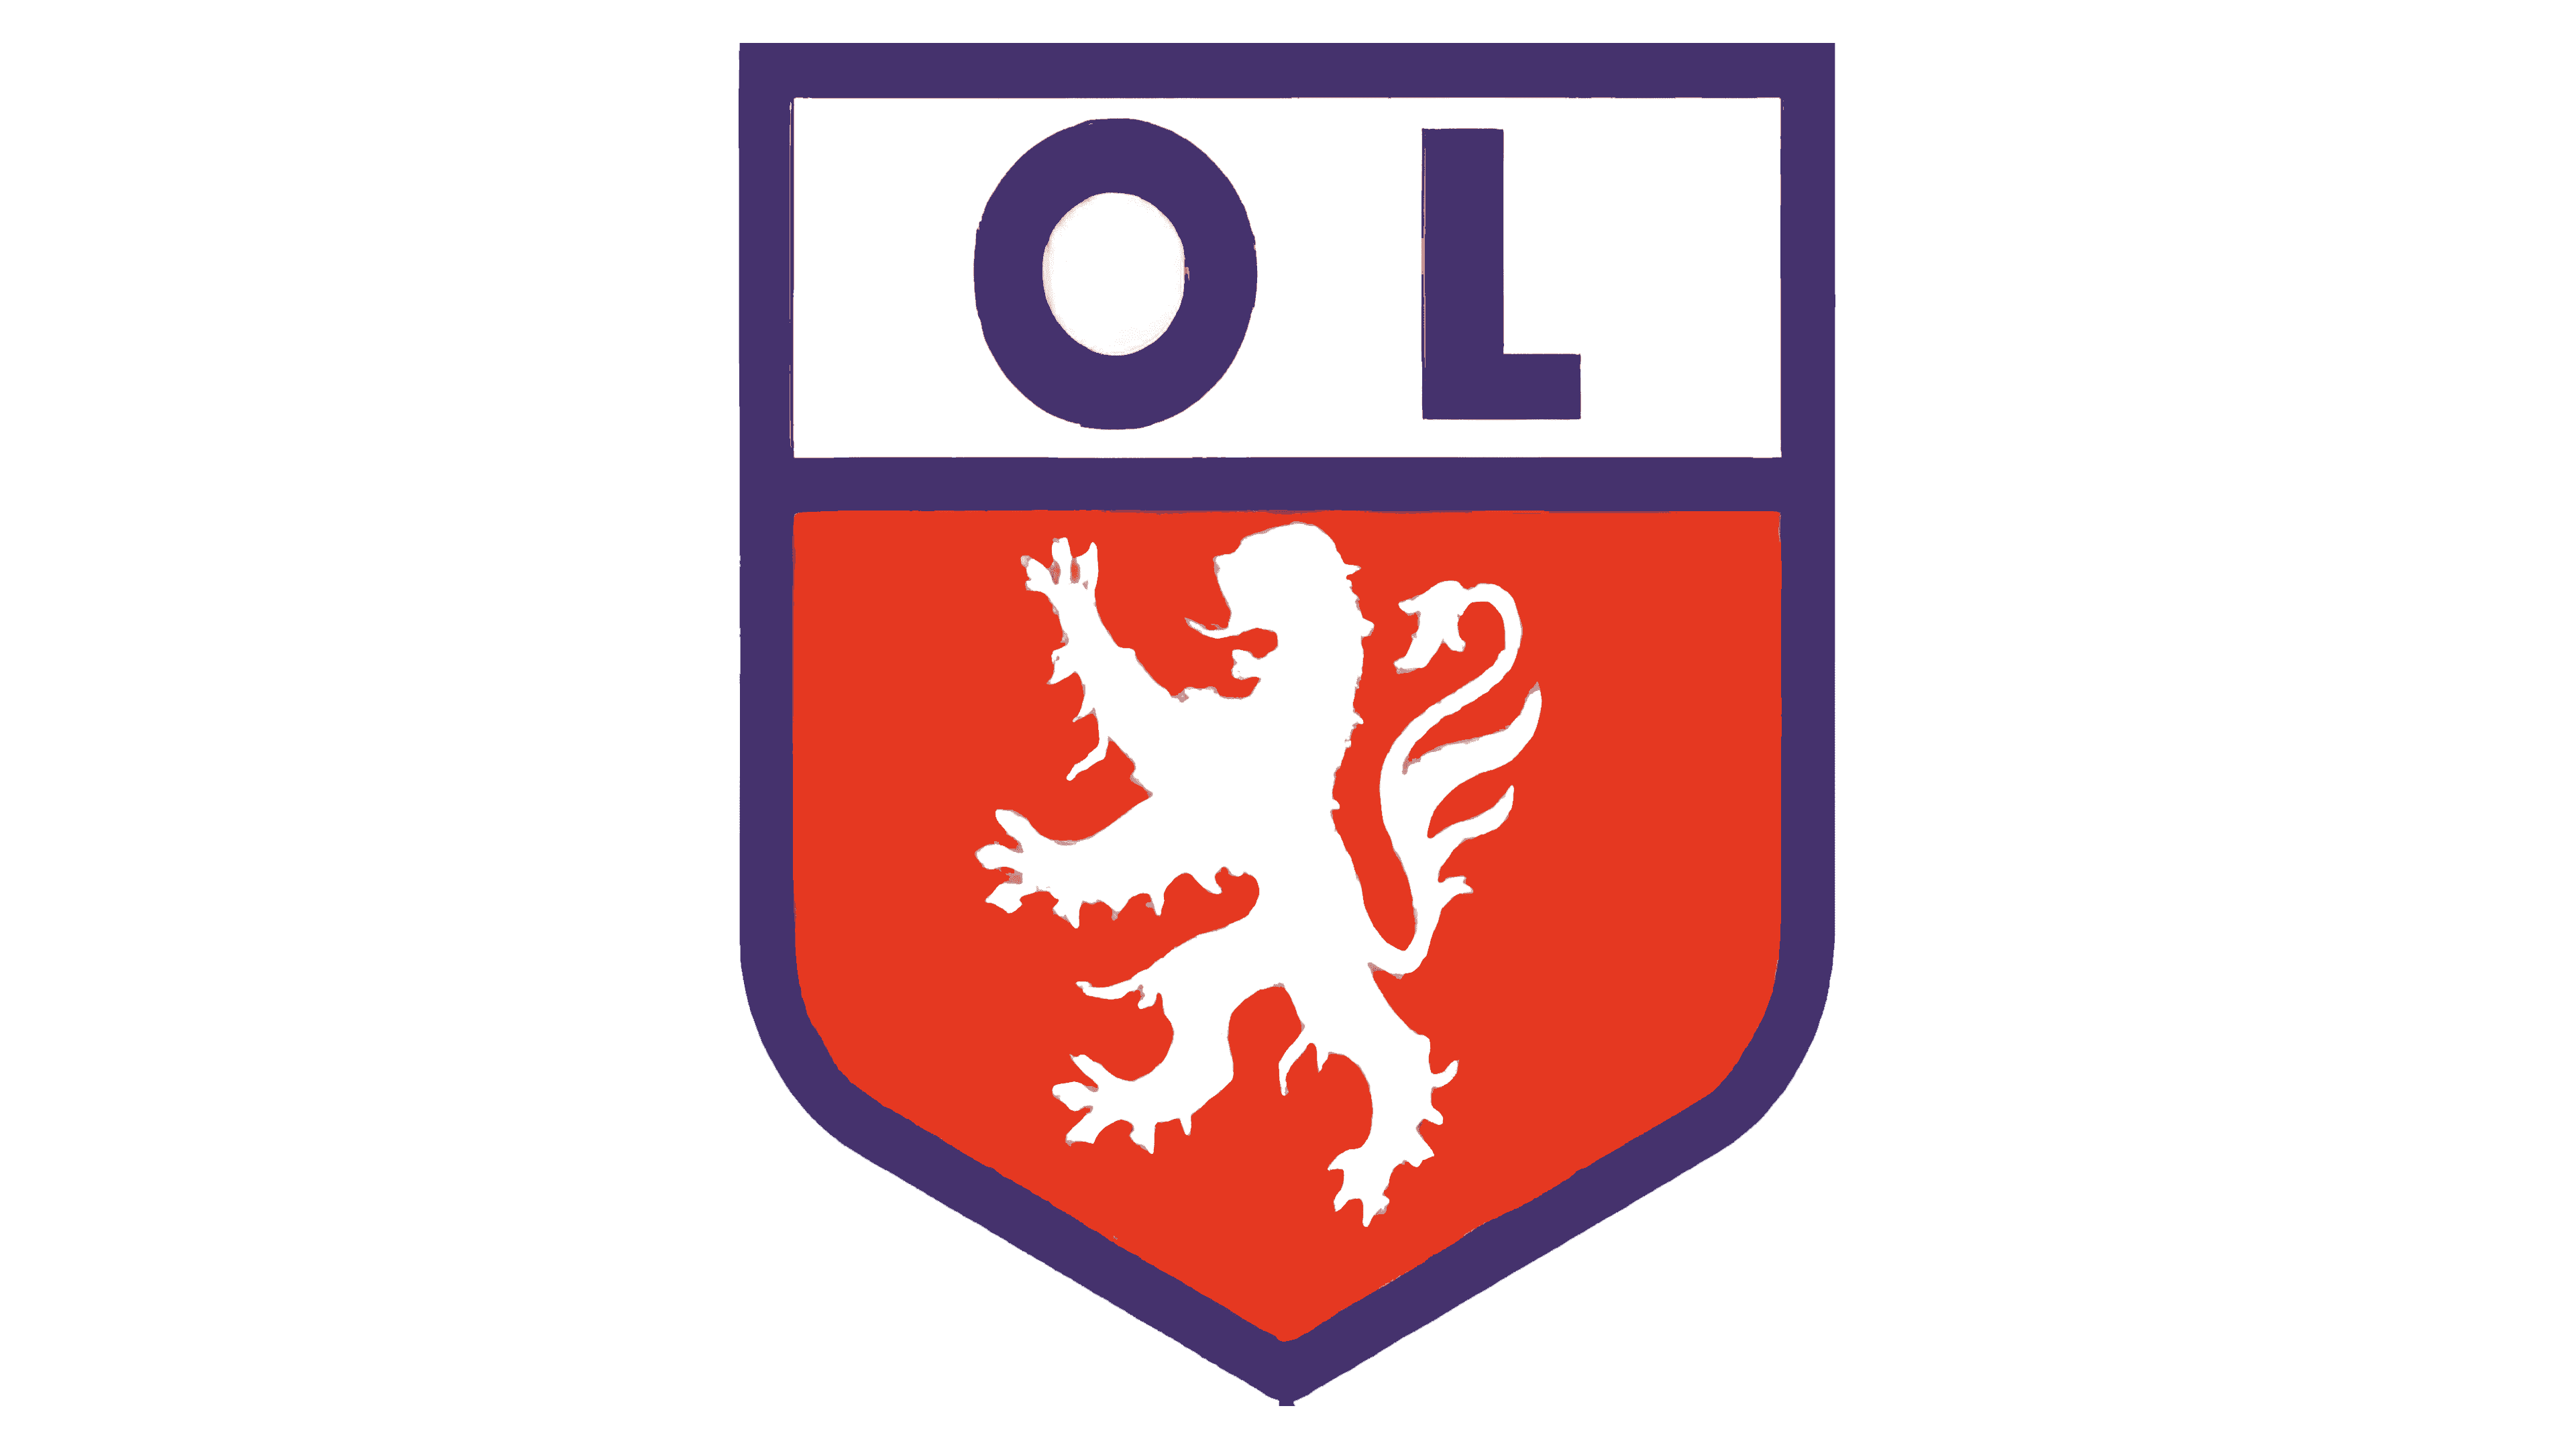 Porte-clés Logo OL - Olympique Lyonnais